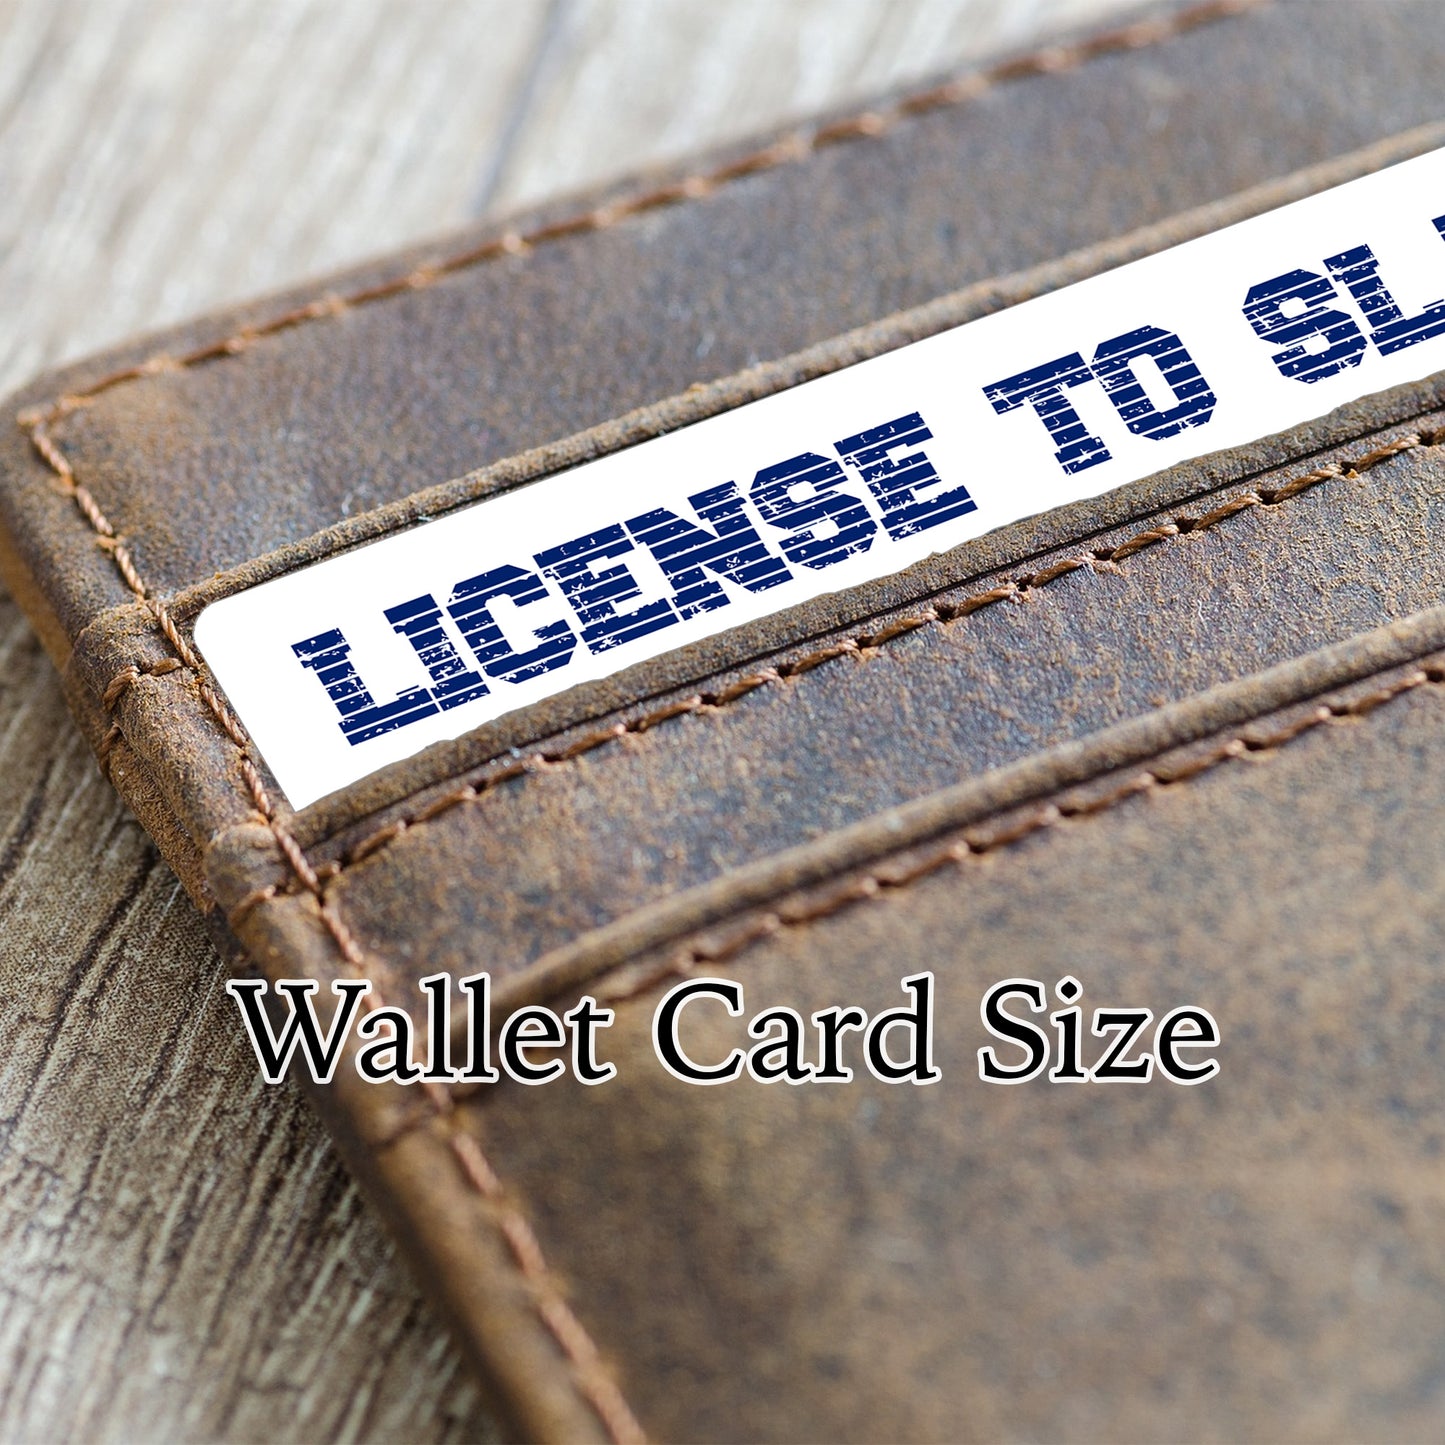 Demisexual pride personalised license to slay card